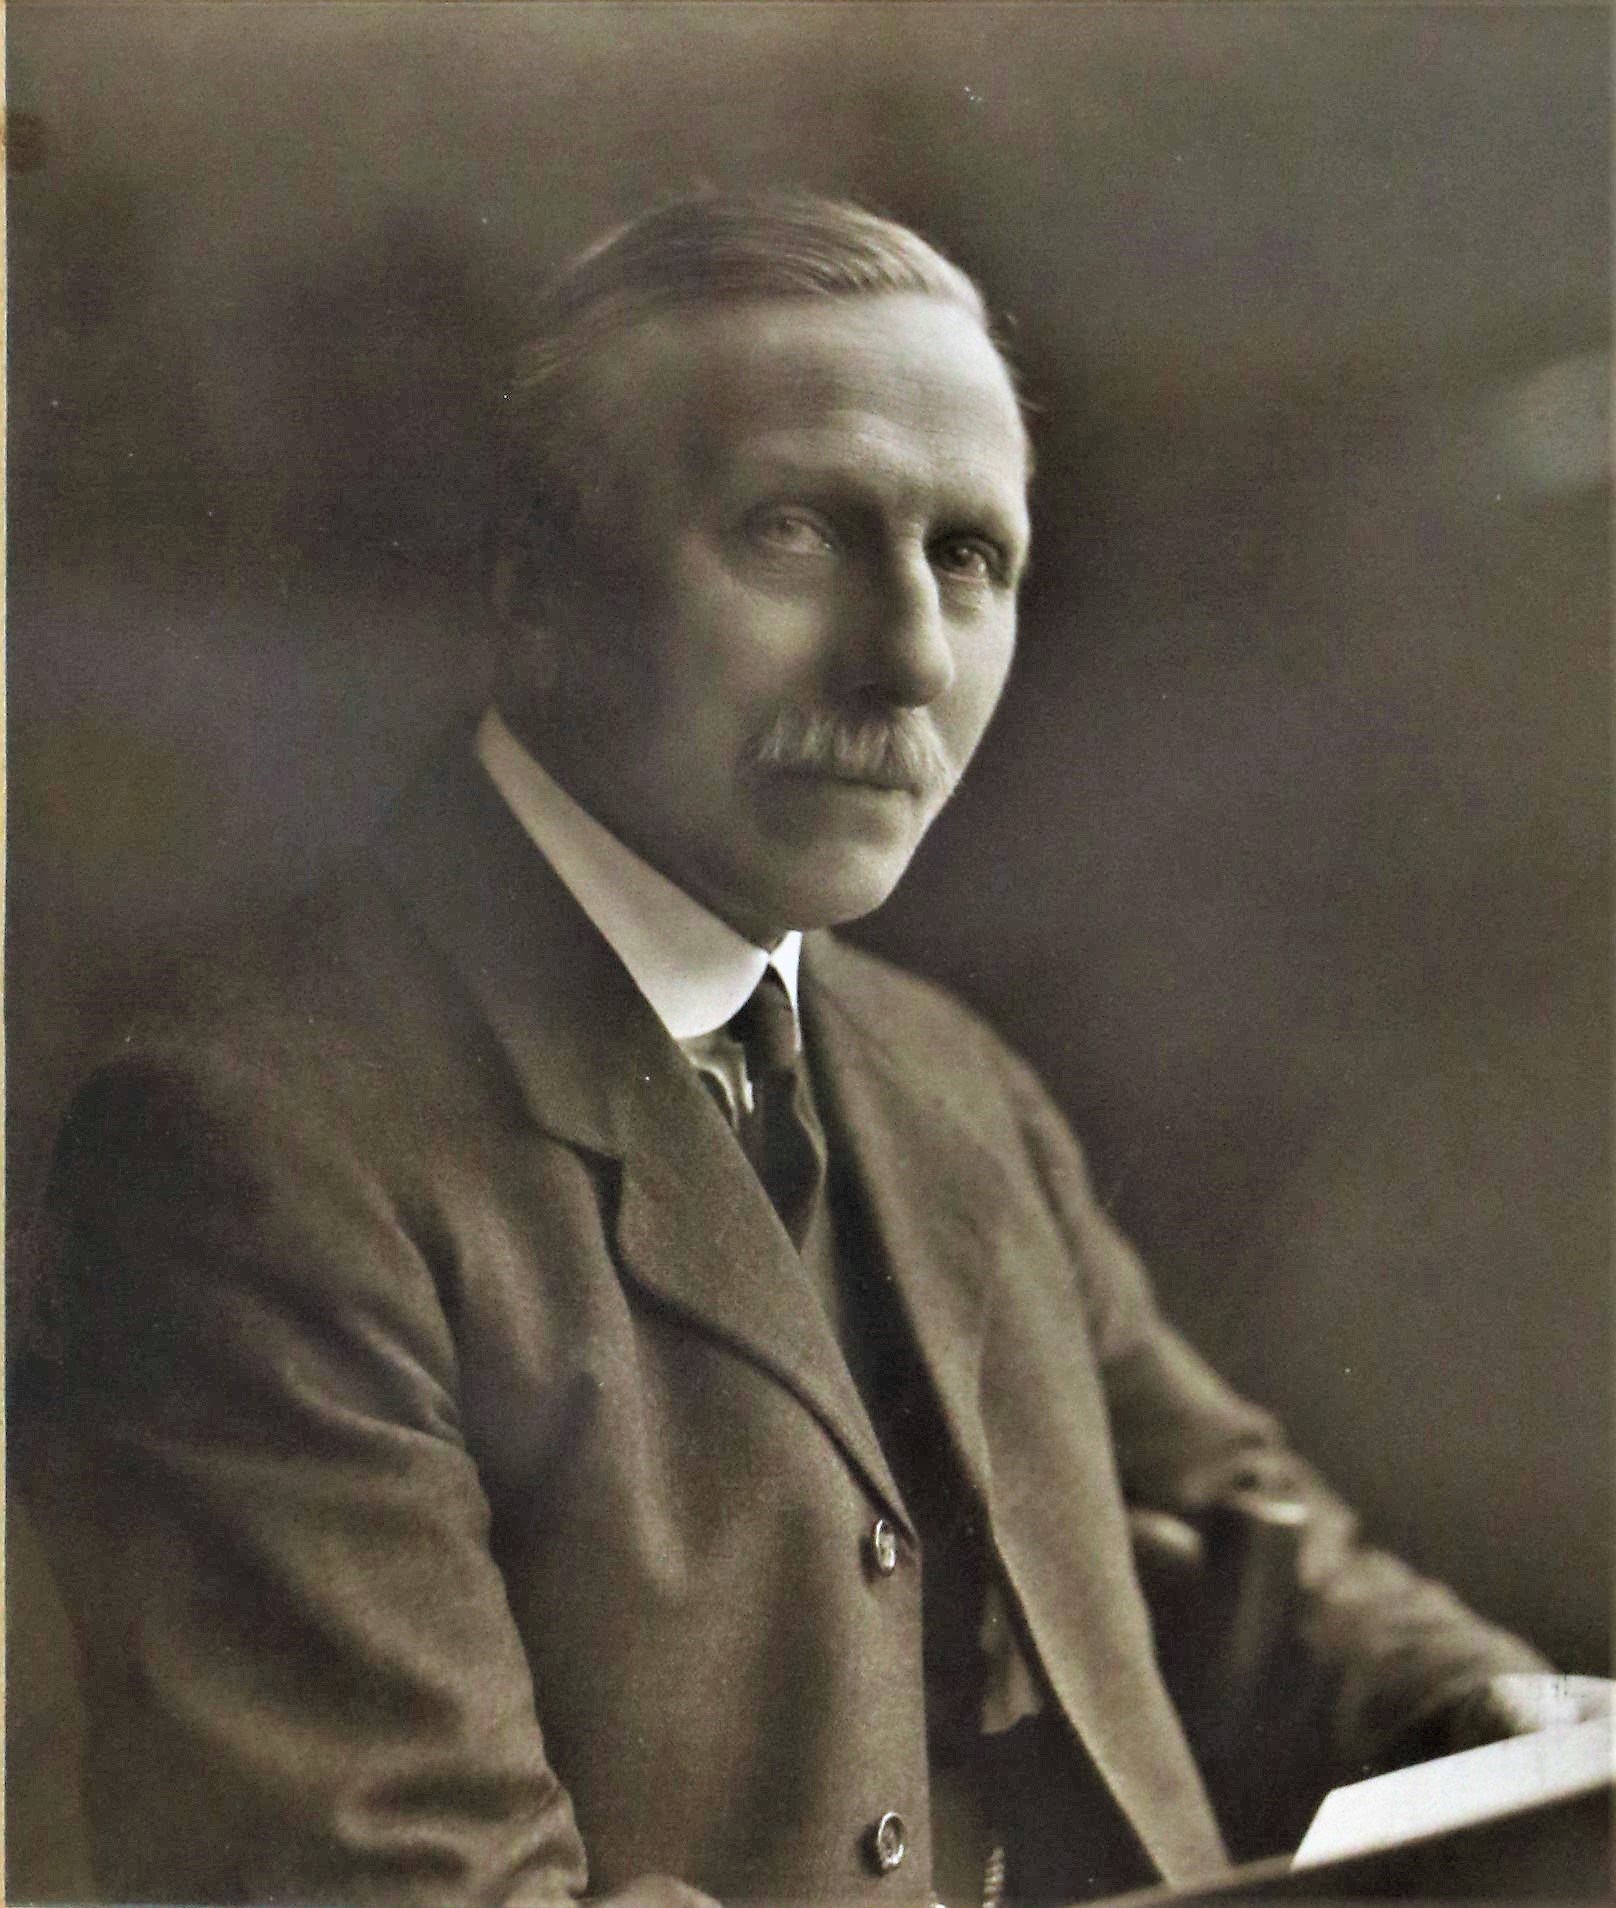 Bertram Luard-Selby, Cathedral Organist 1900-1916